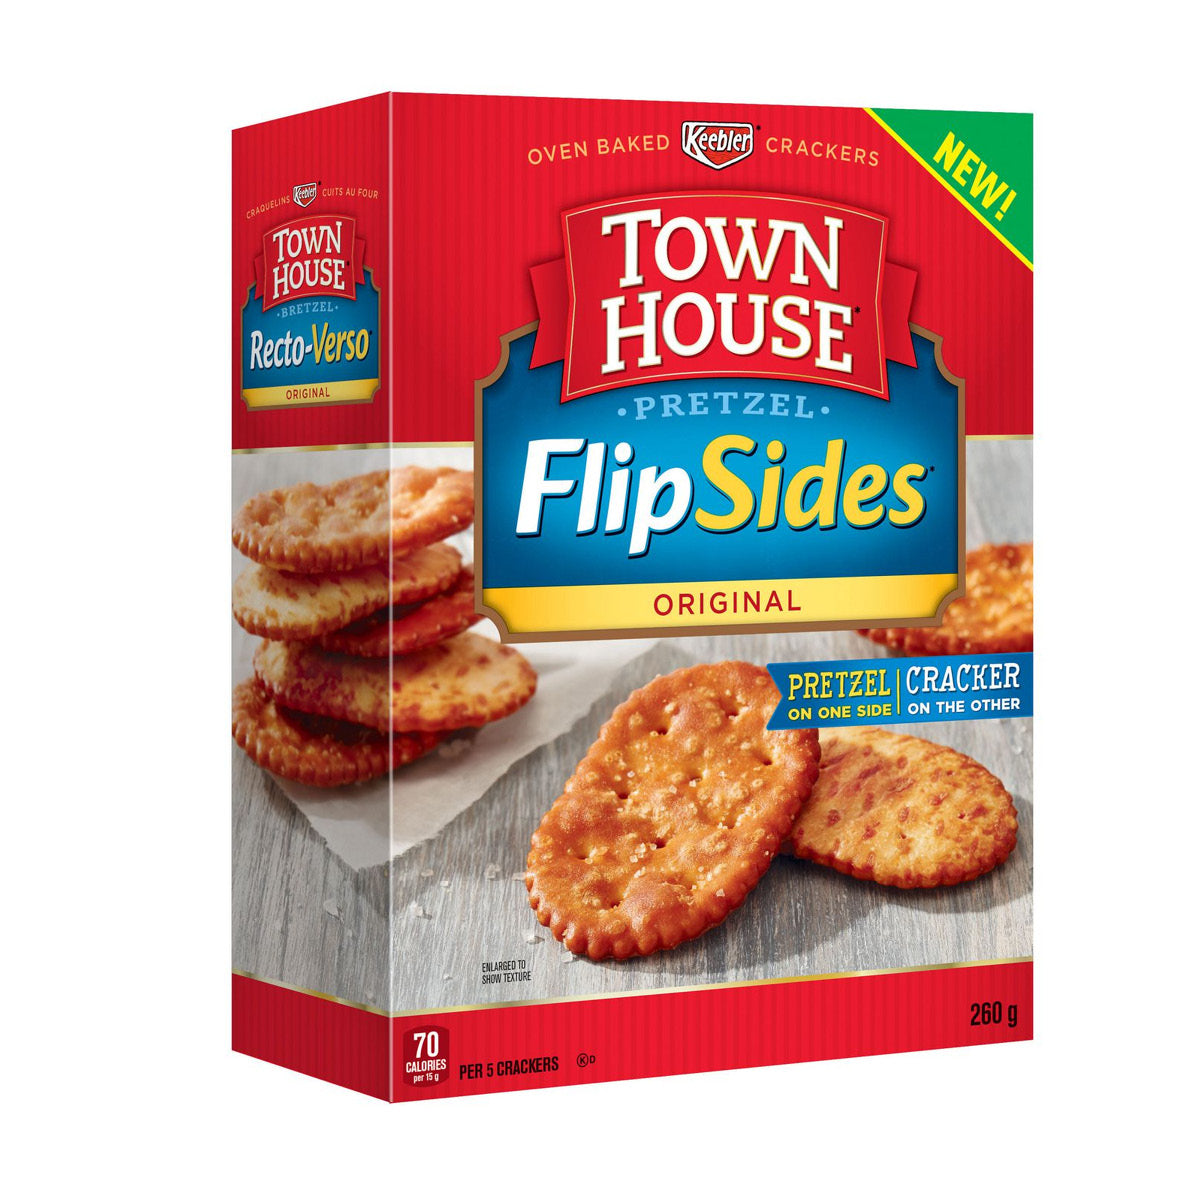 Town House FlipSides Original Pretzel Crackers, 260g